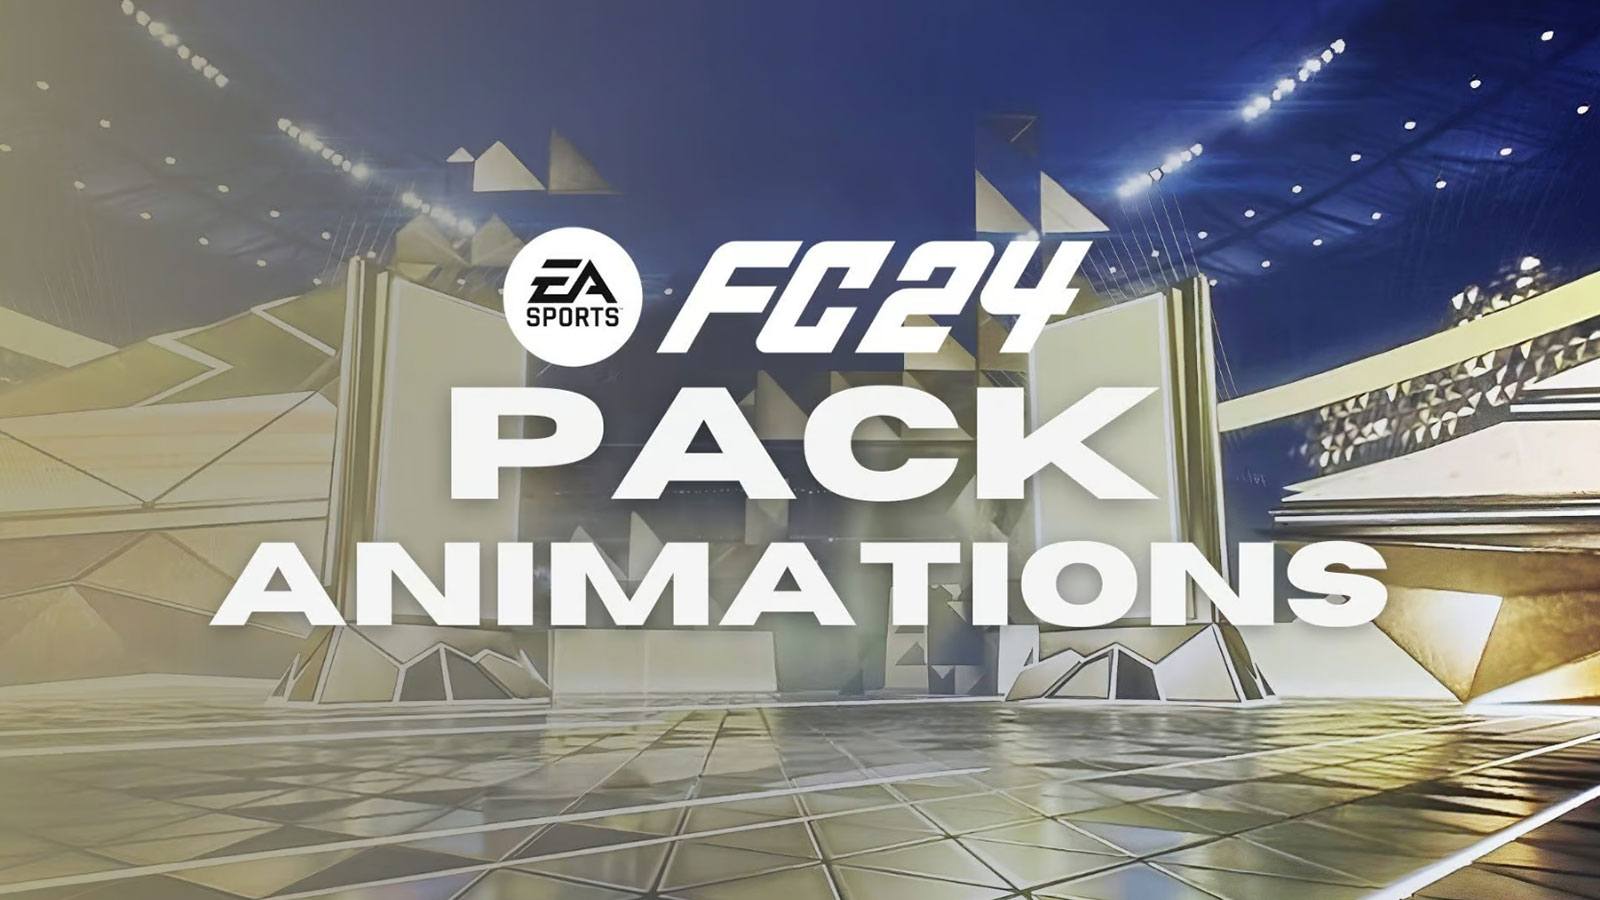 Animations des packs EA FC 24